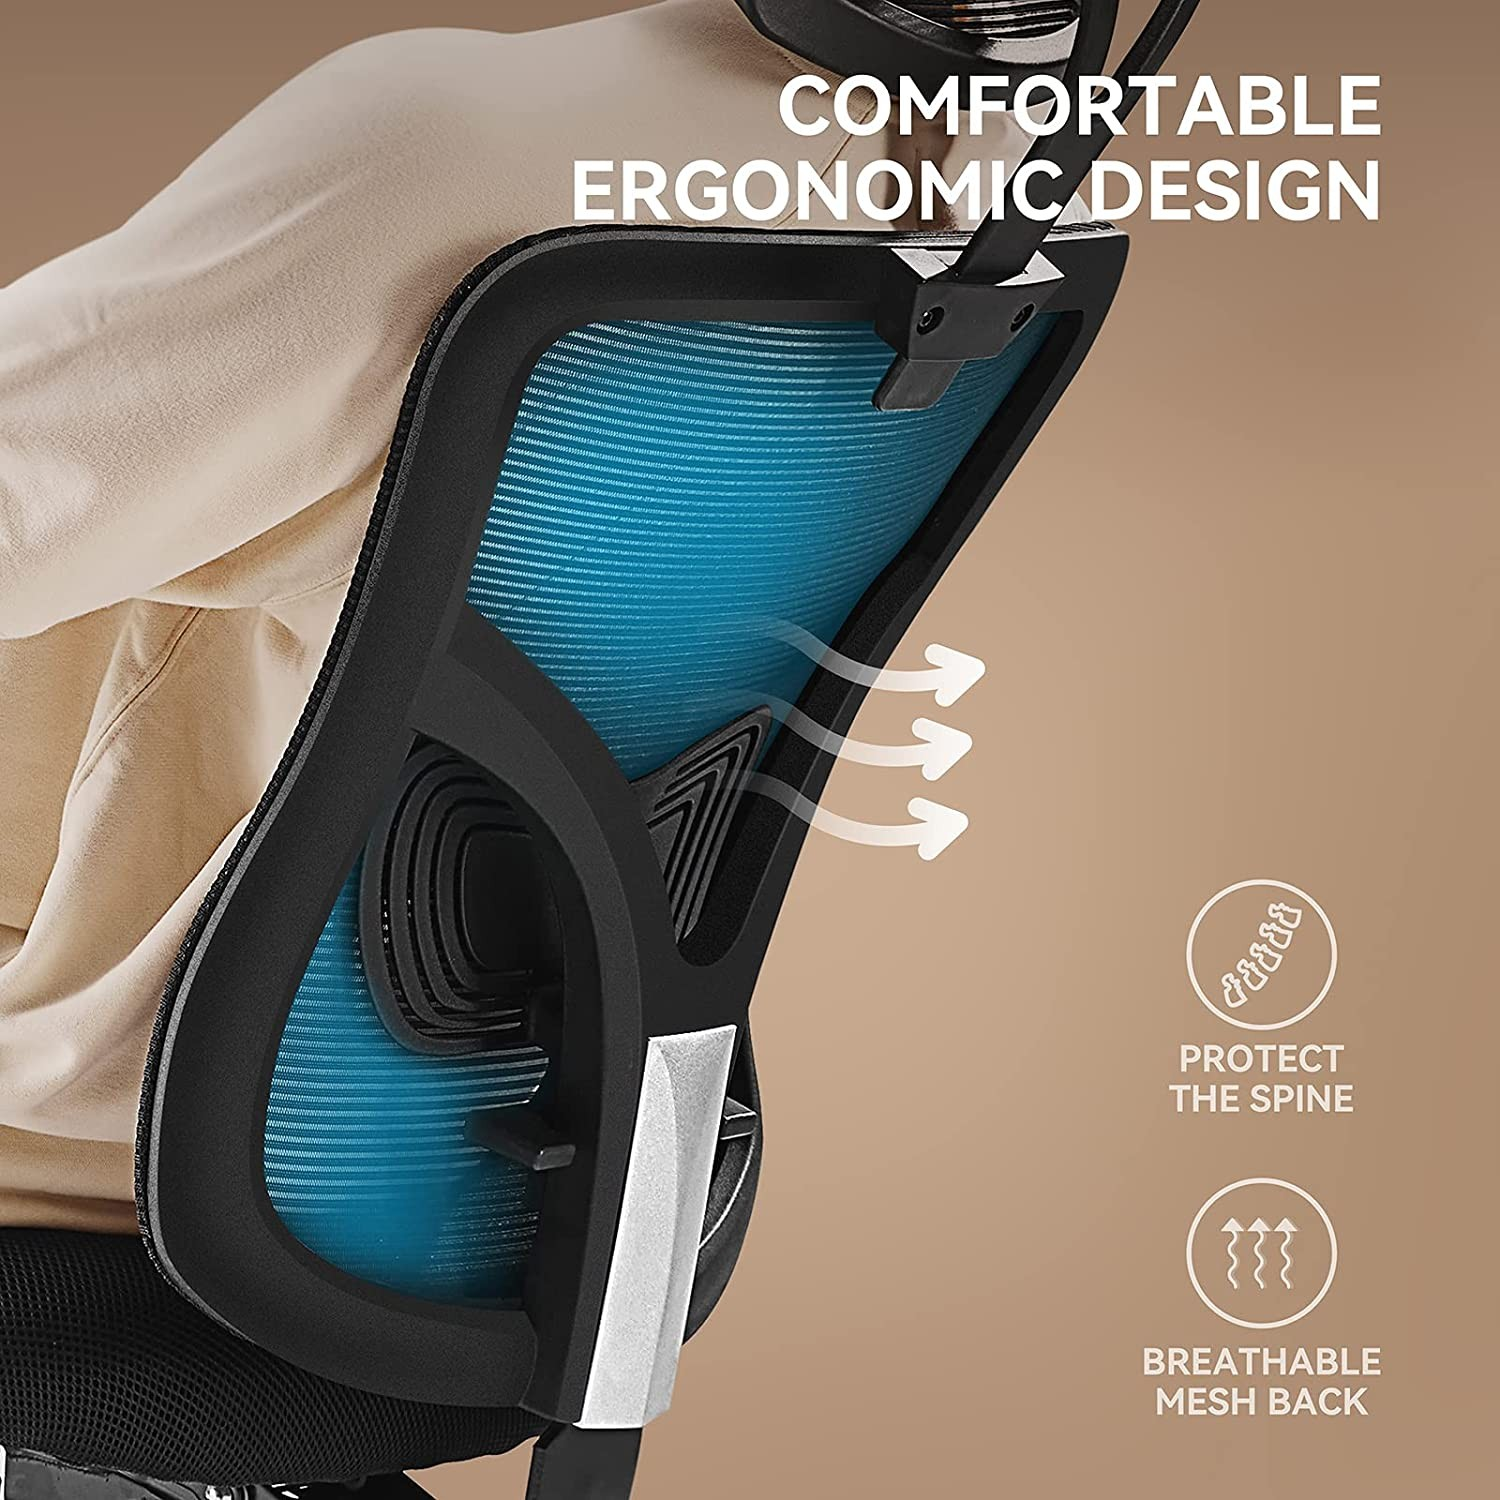 https://www.wyida.com/ergonomic-office-chair- adjustmentable-headrest-product/